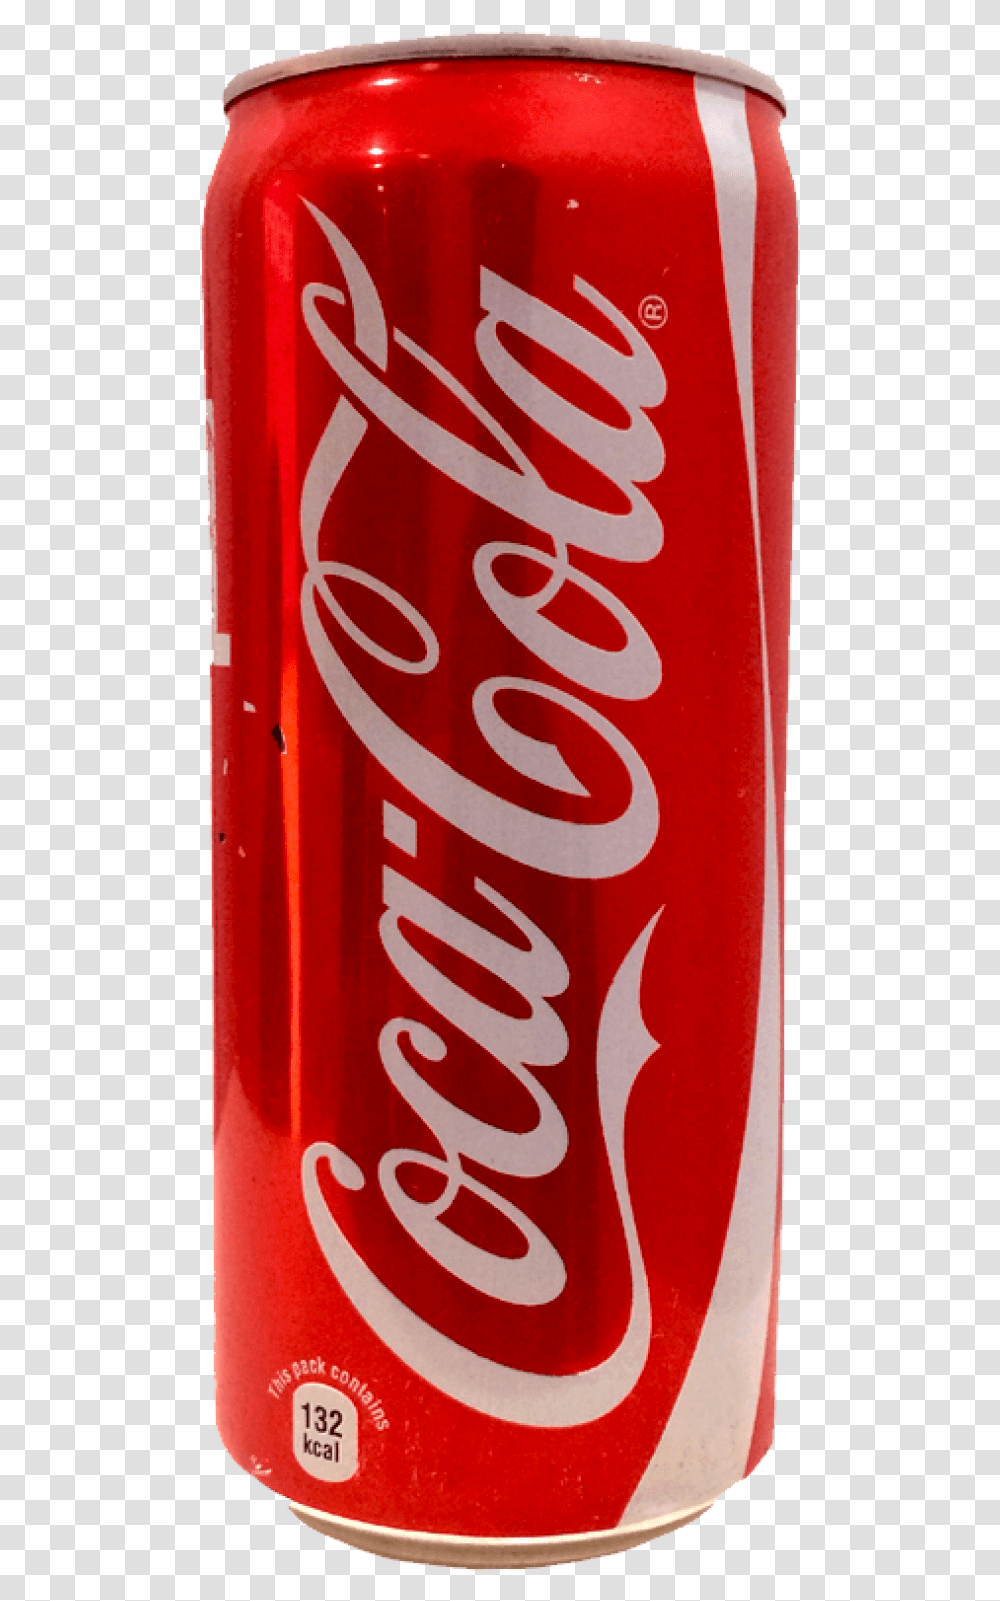 Cocacola Free Download Coca Cola Can, Coke, Beverage, Drink, Soda Transparent Png